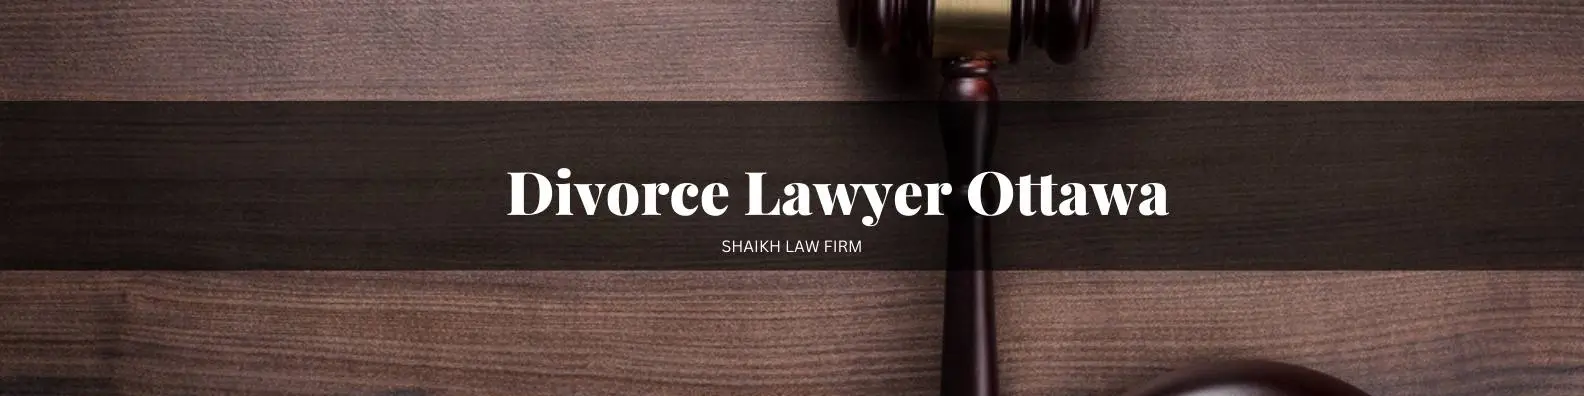 Divorce-Lawyer-Ottawa